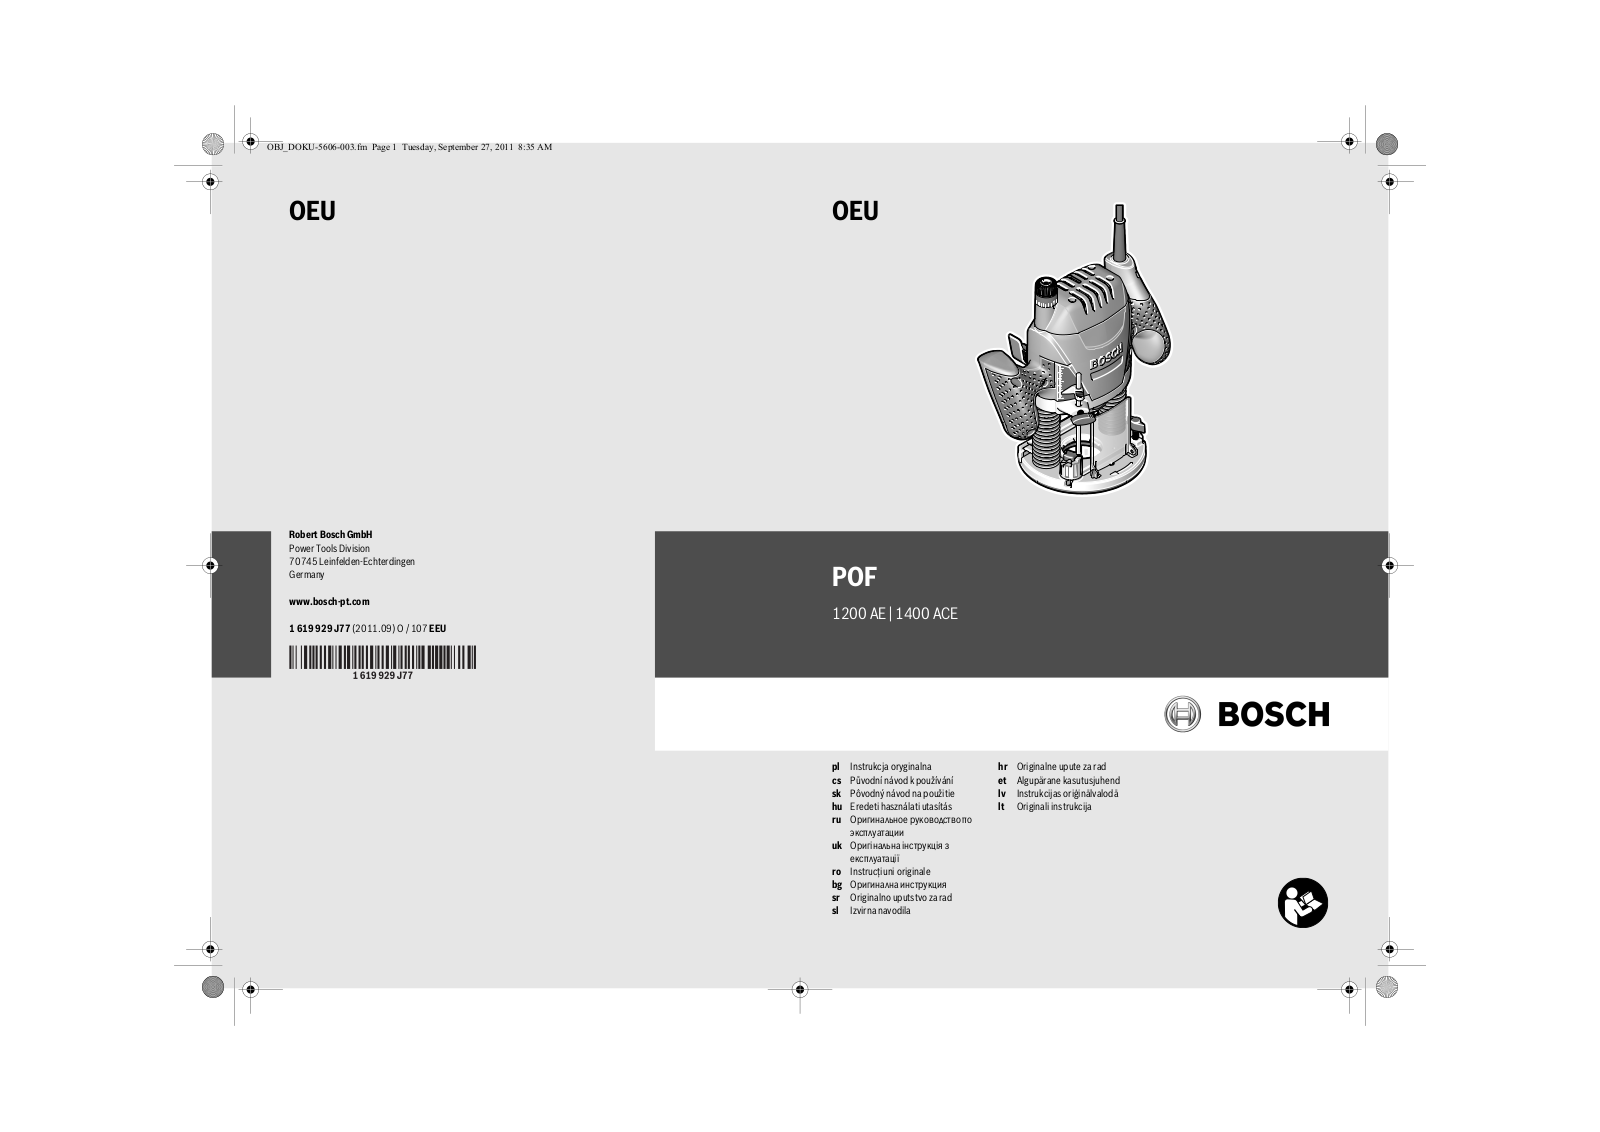 Bosch POF 1200 AE User Manual